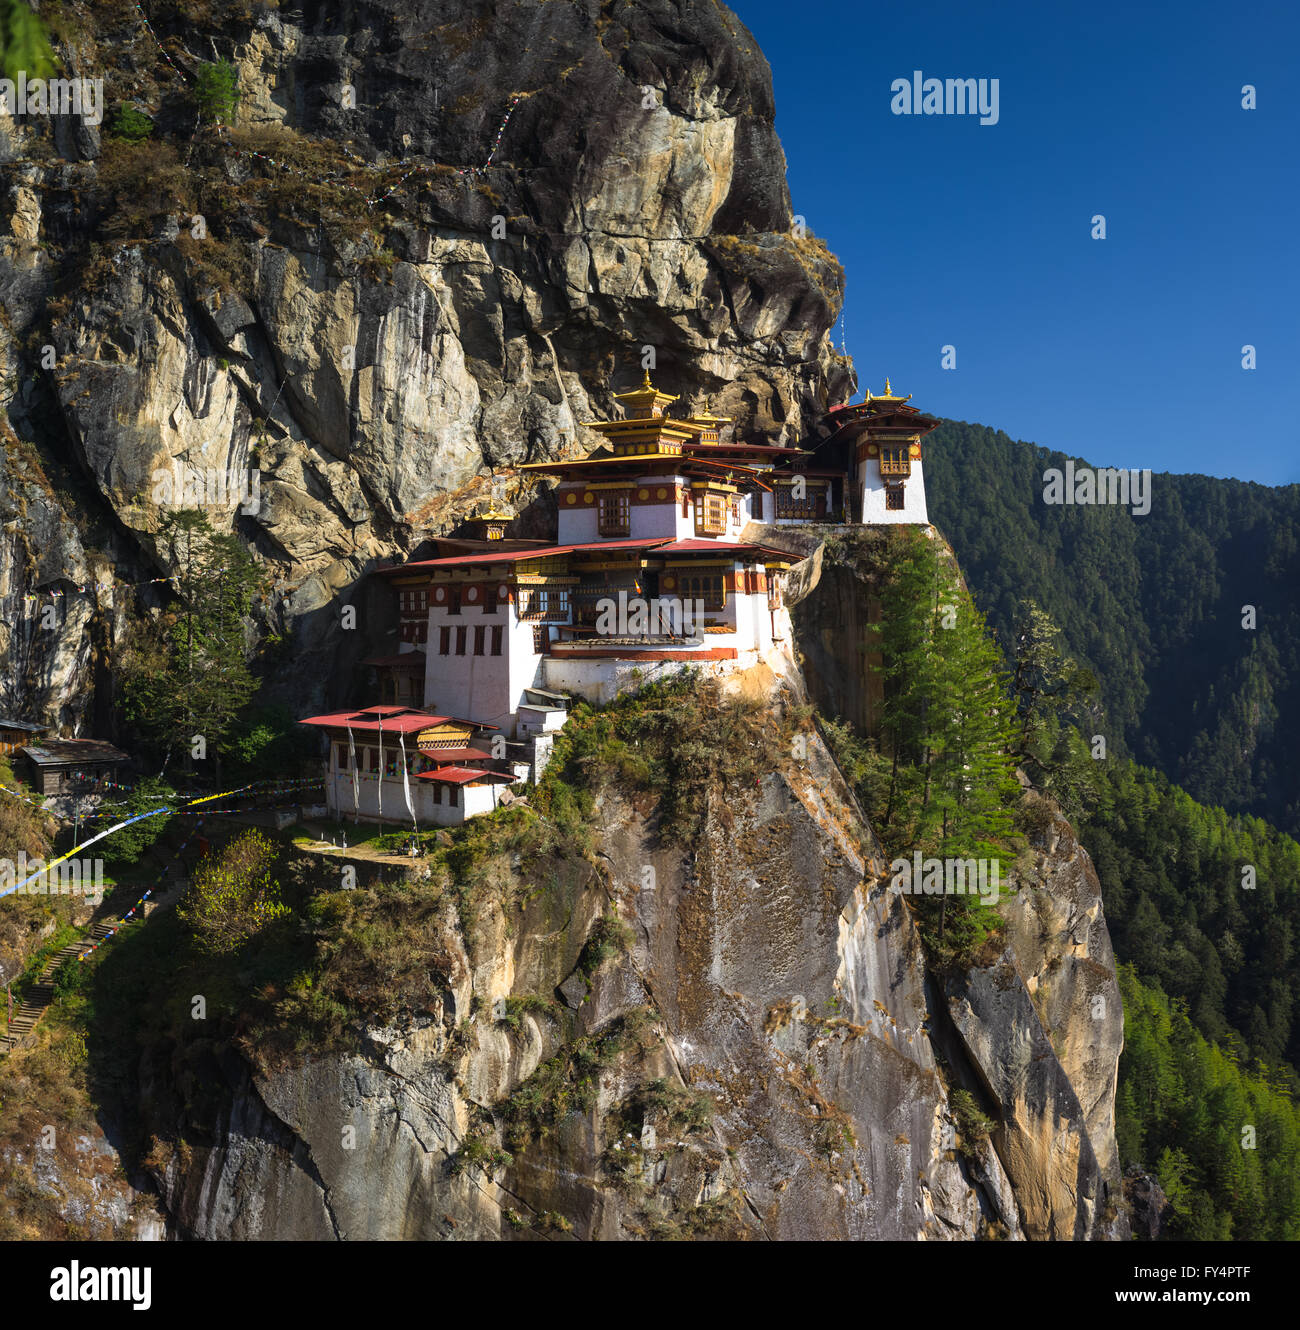 Spectacular Tiger's Nest Monastery (Taktshang Goemba), perched on cliff near Paro, Bhutan. Stock Photo